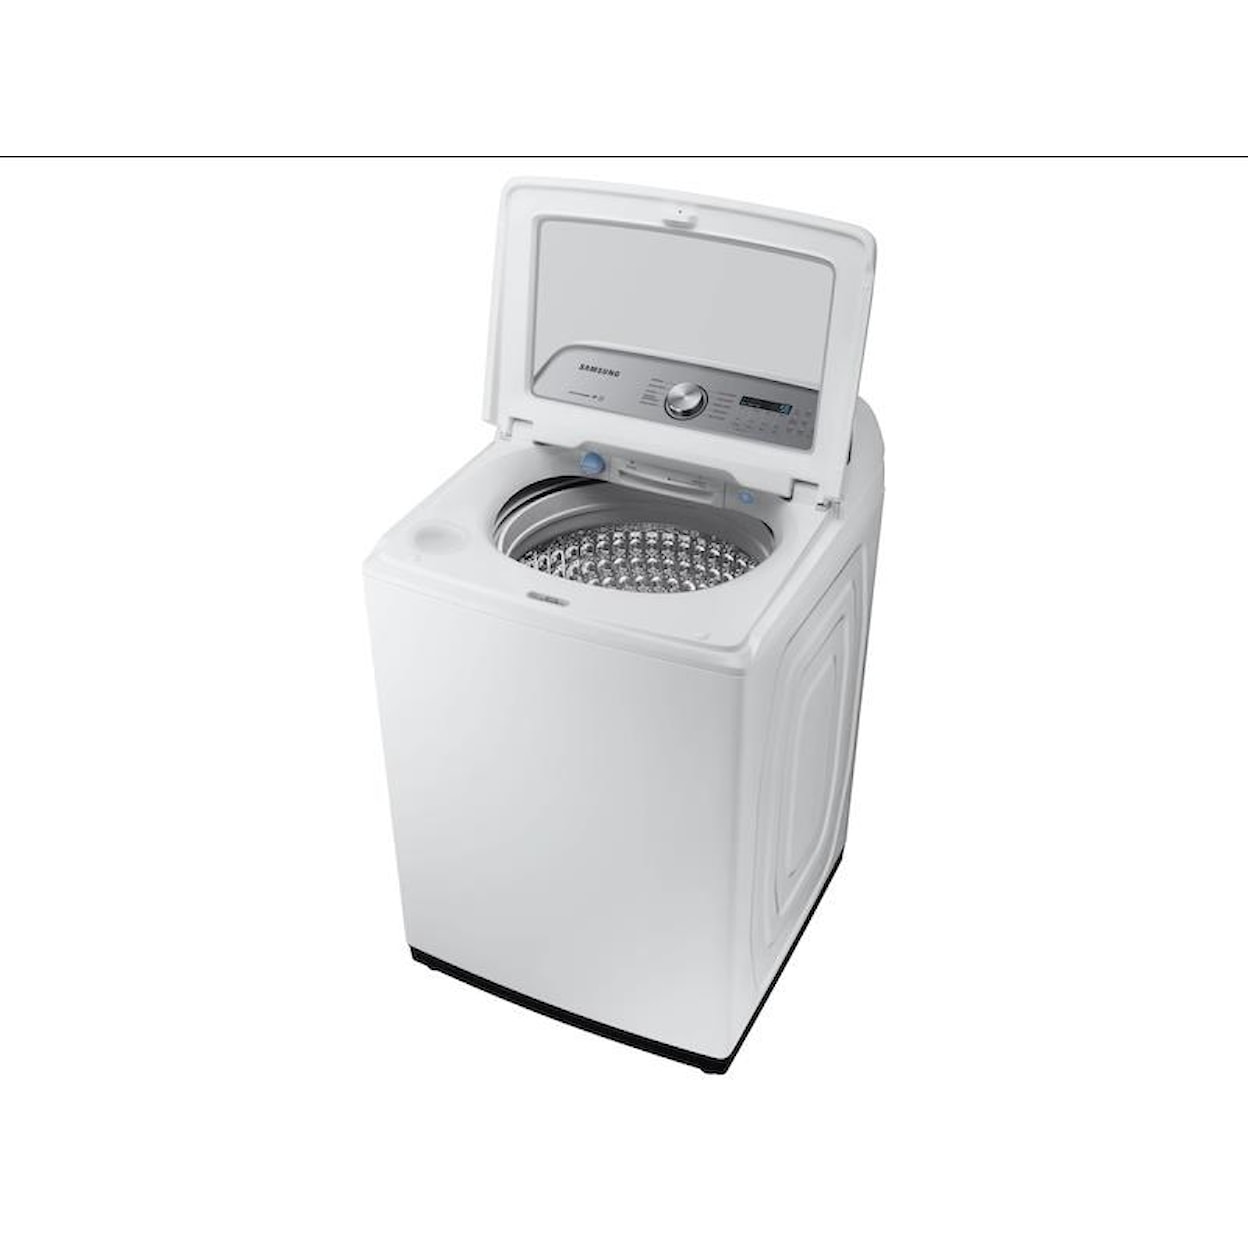 Samsung Appliances Top Load Washers - Samsung 4.9 CF WASHER